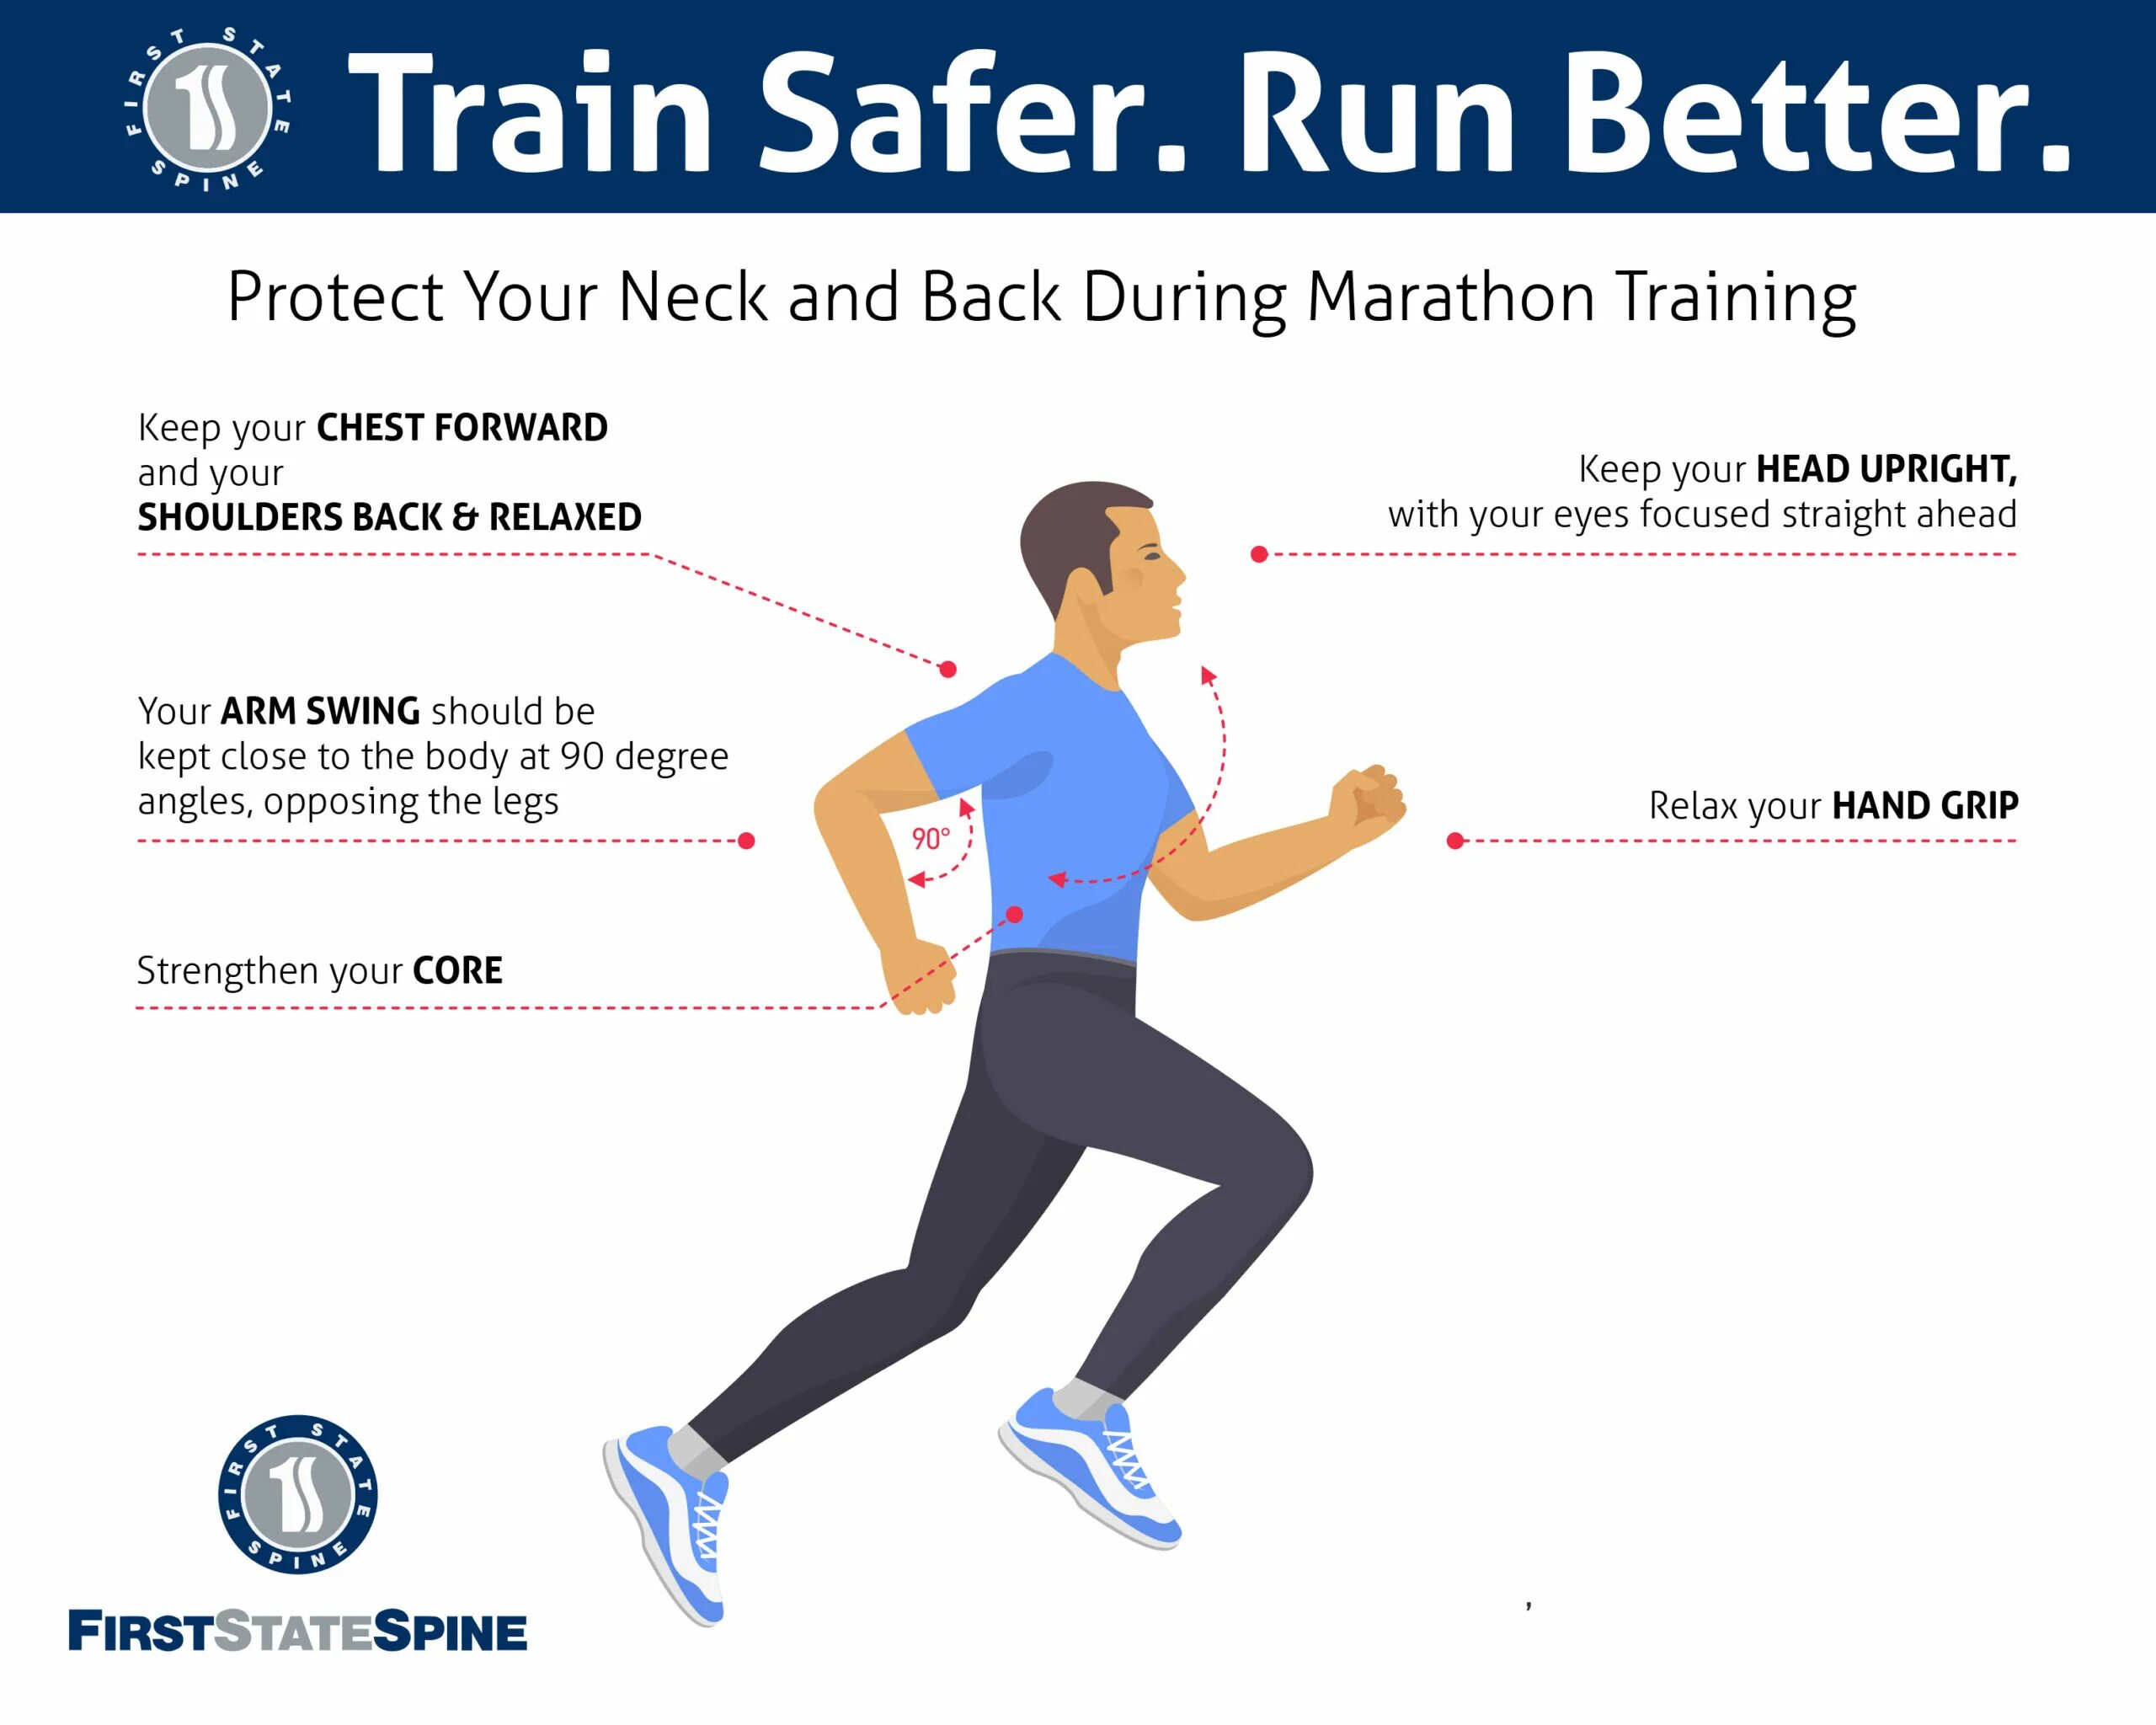 Came running перевод. Long Neck Run картинки. Safer Training. Protect your body краткий рассказ.